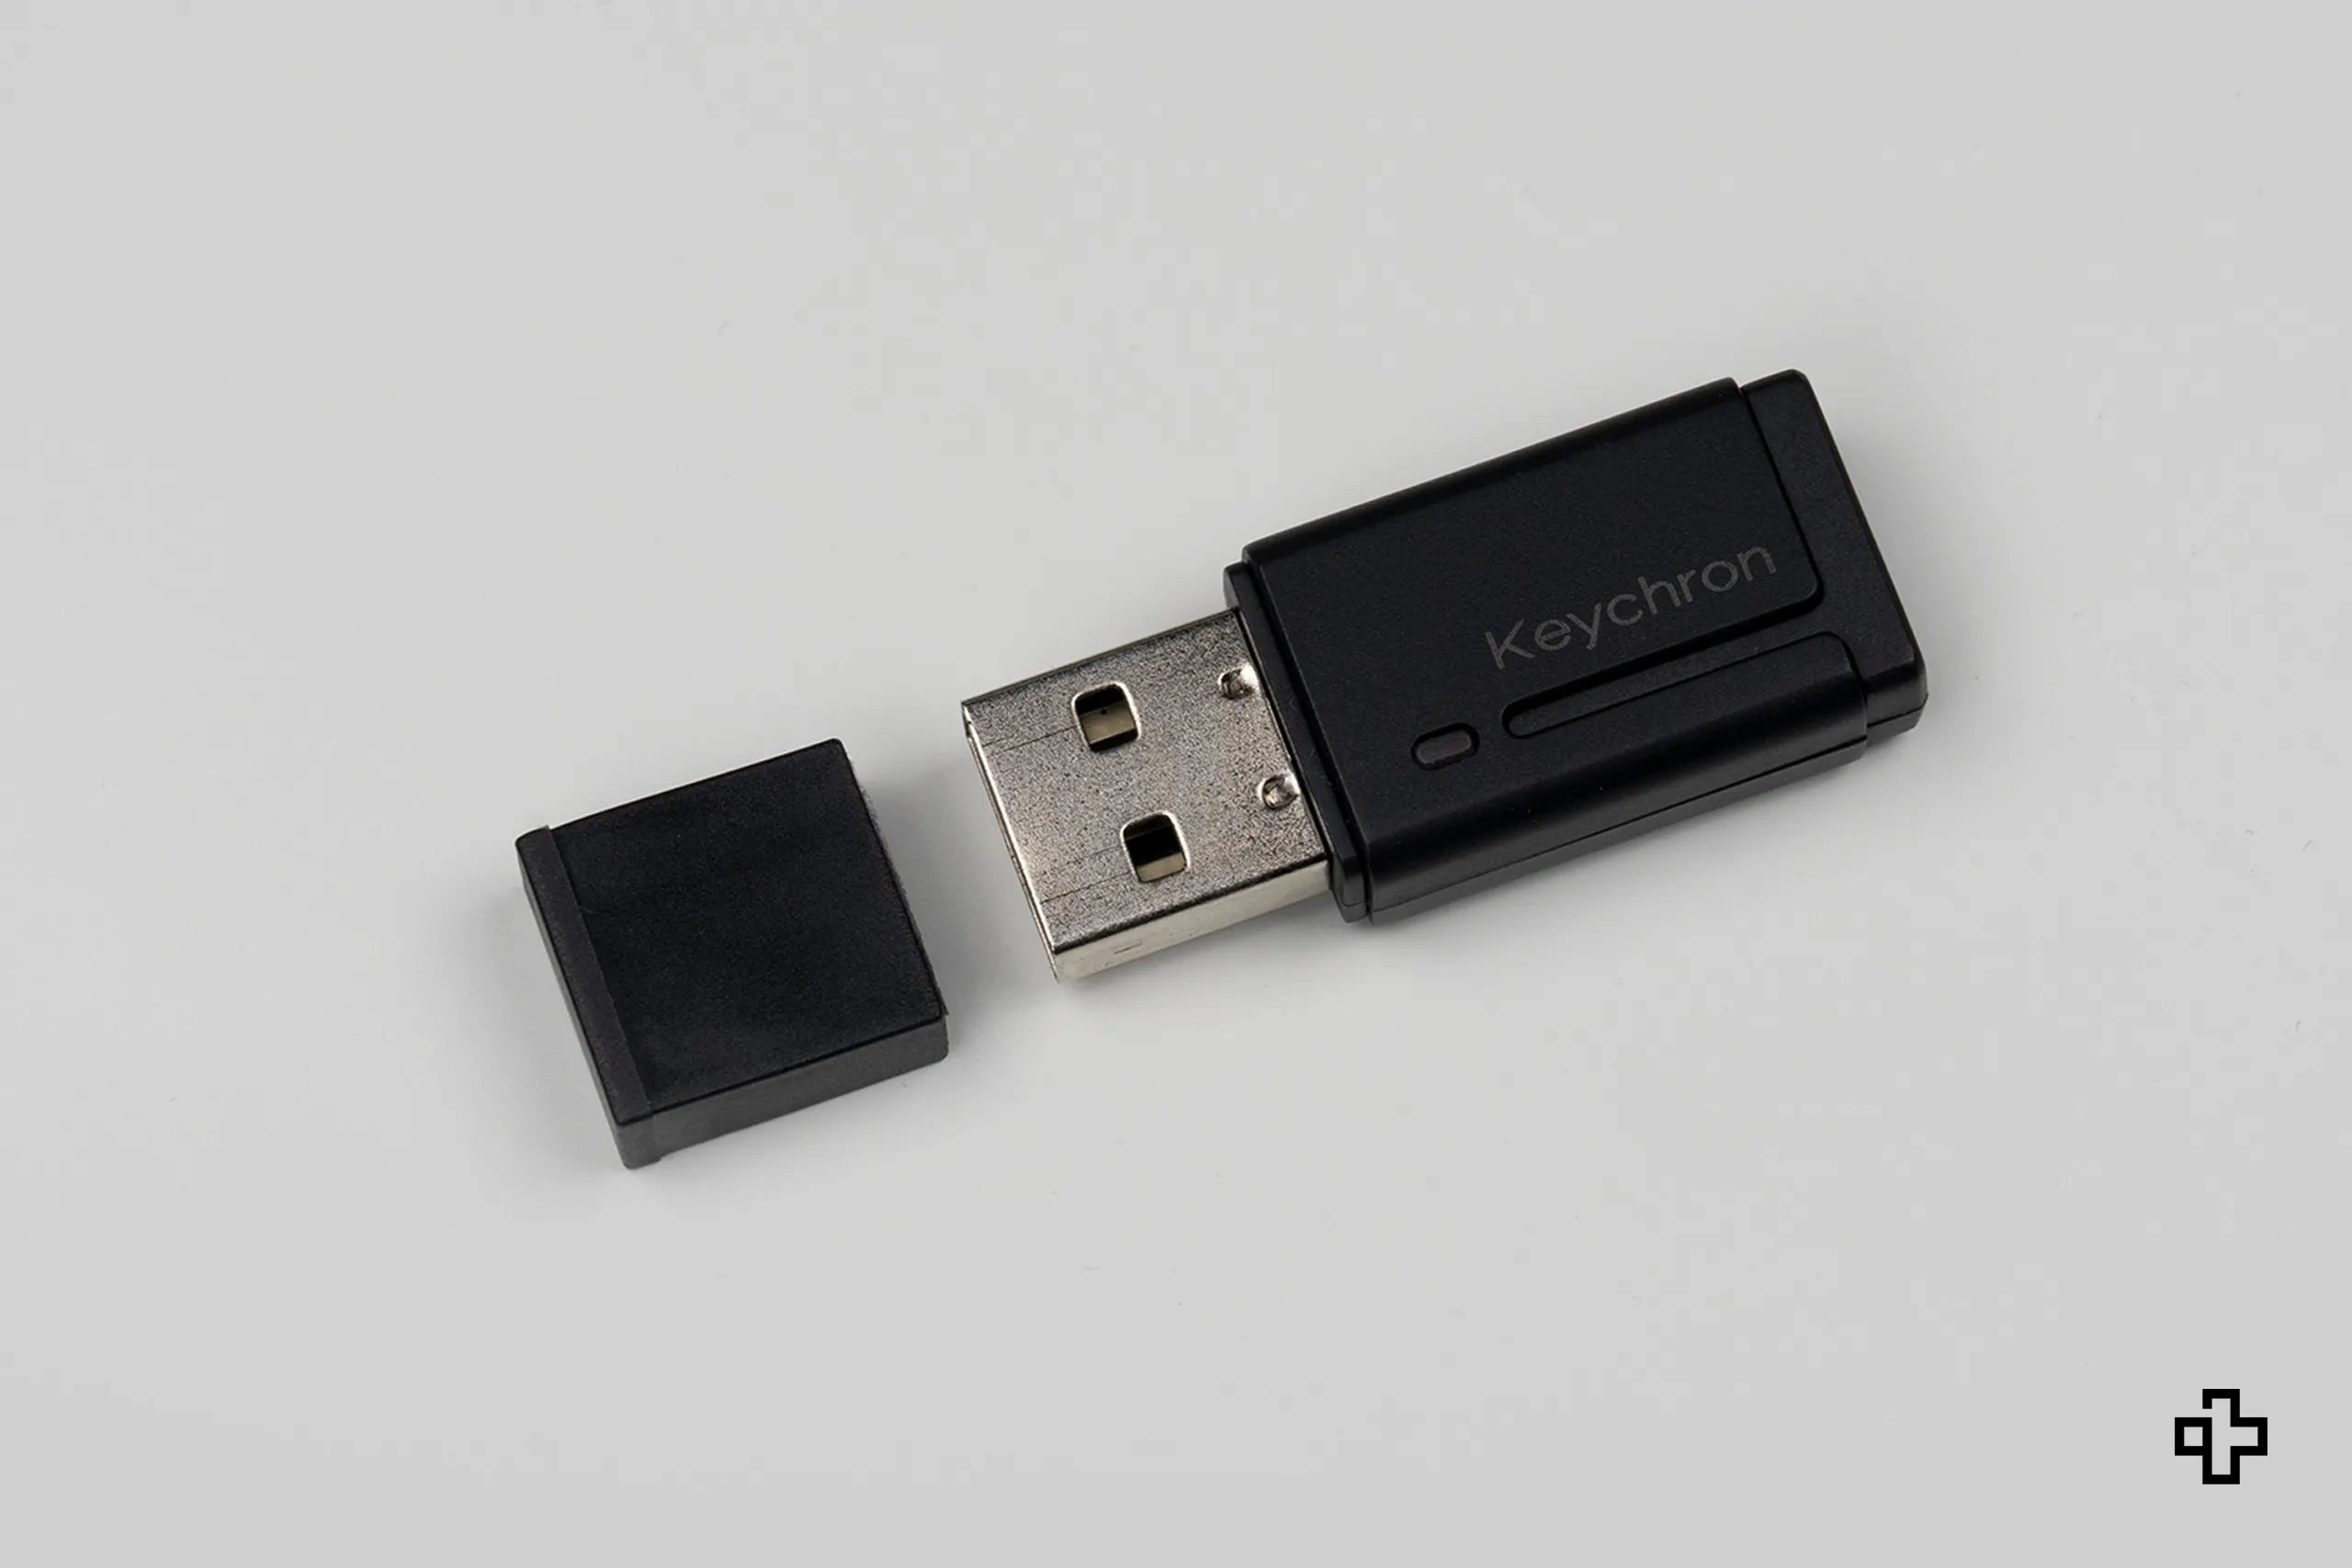 USB Bluetooth-adapter för PC 5.1 - Bluetooth Dongle Sweden